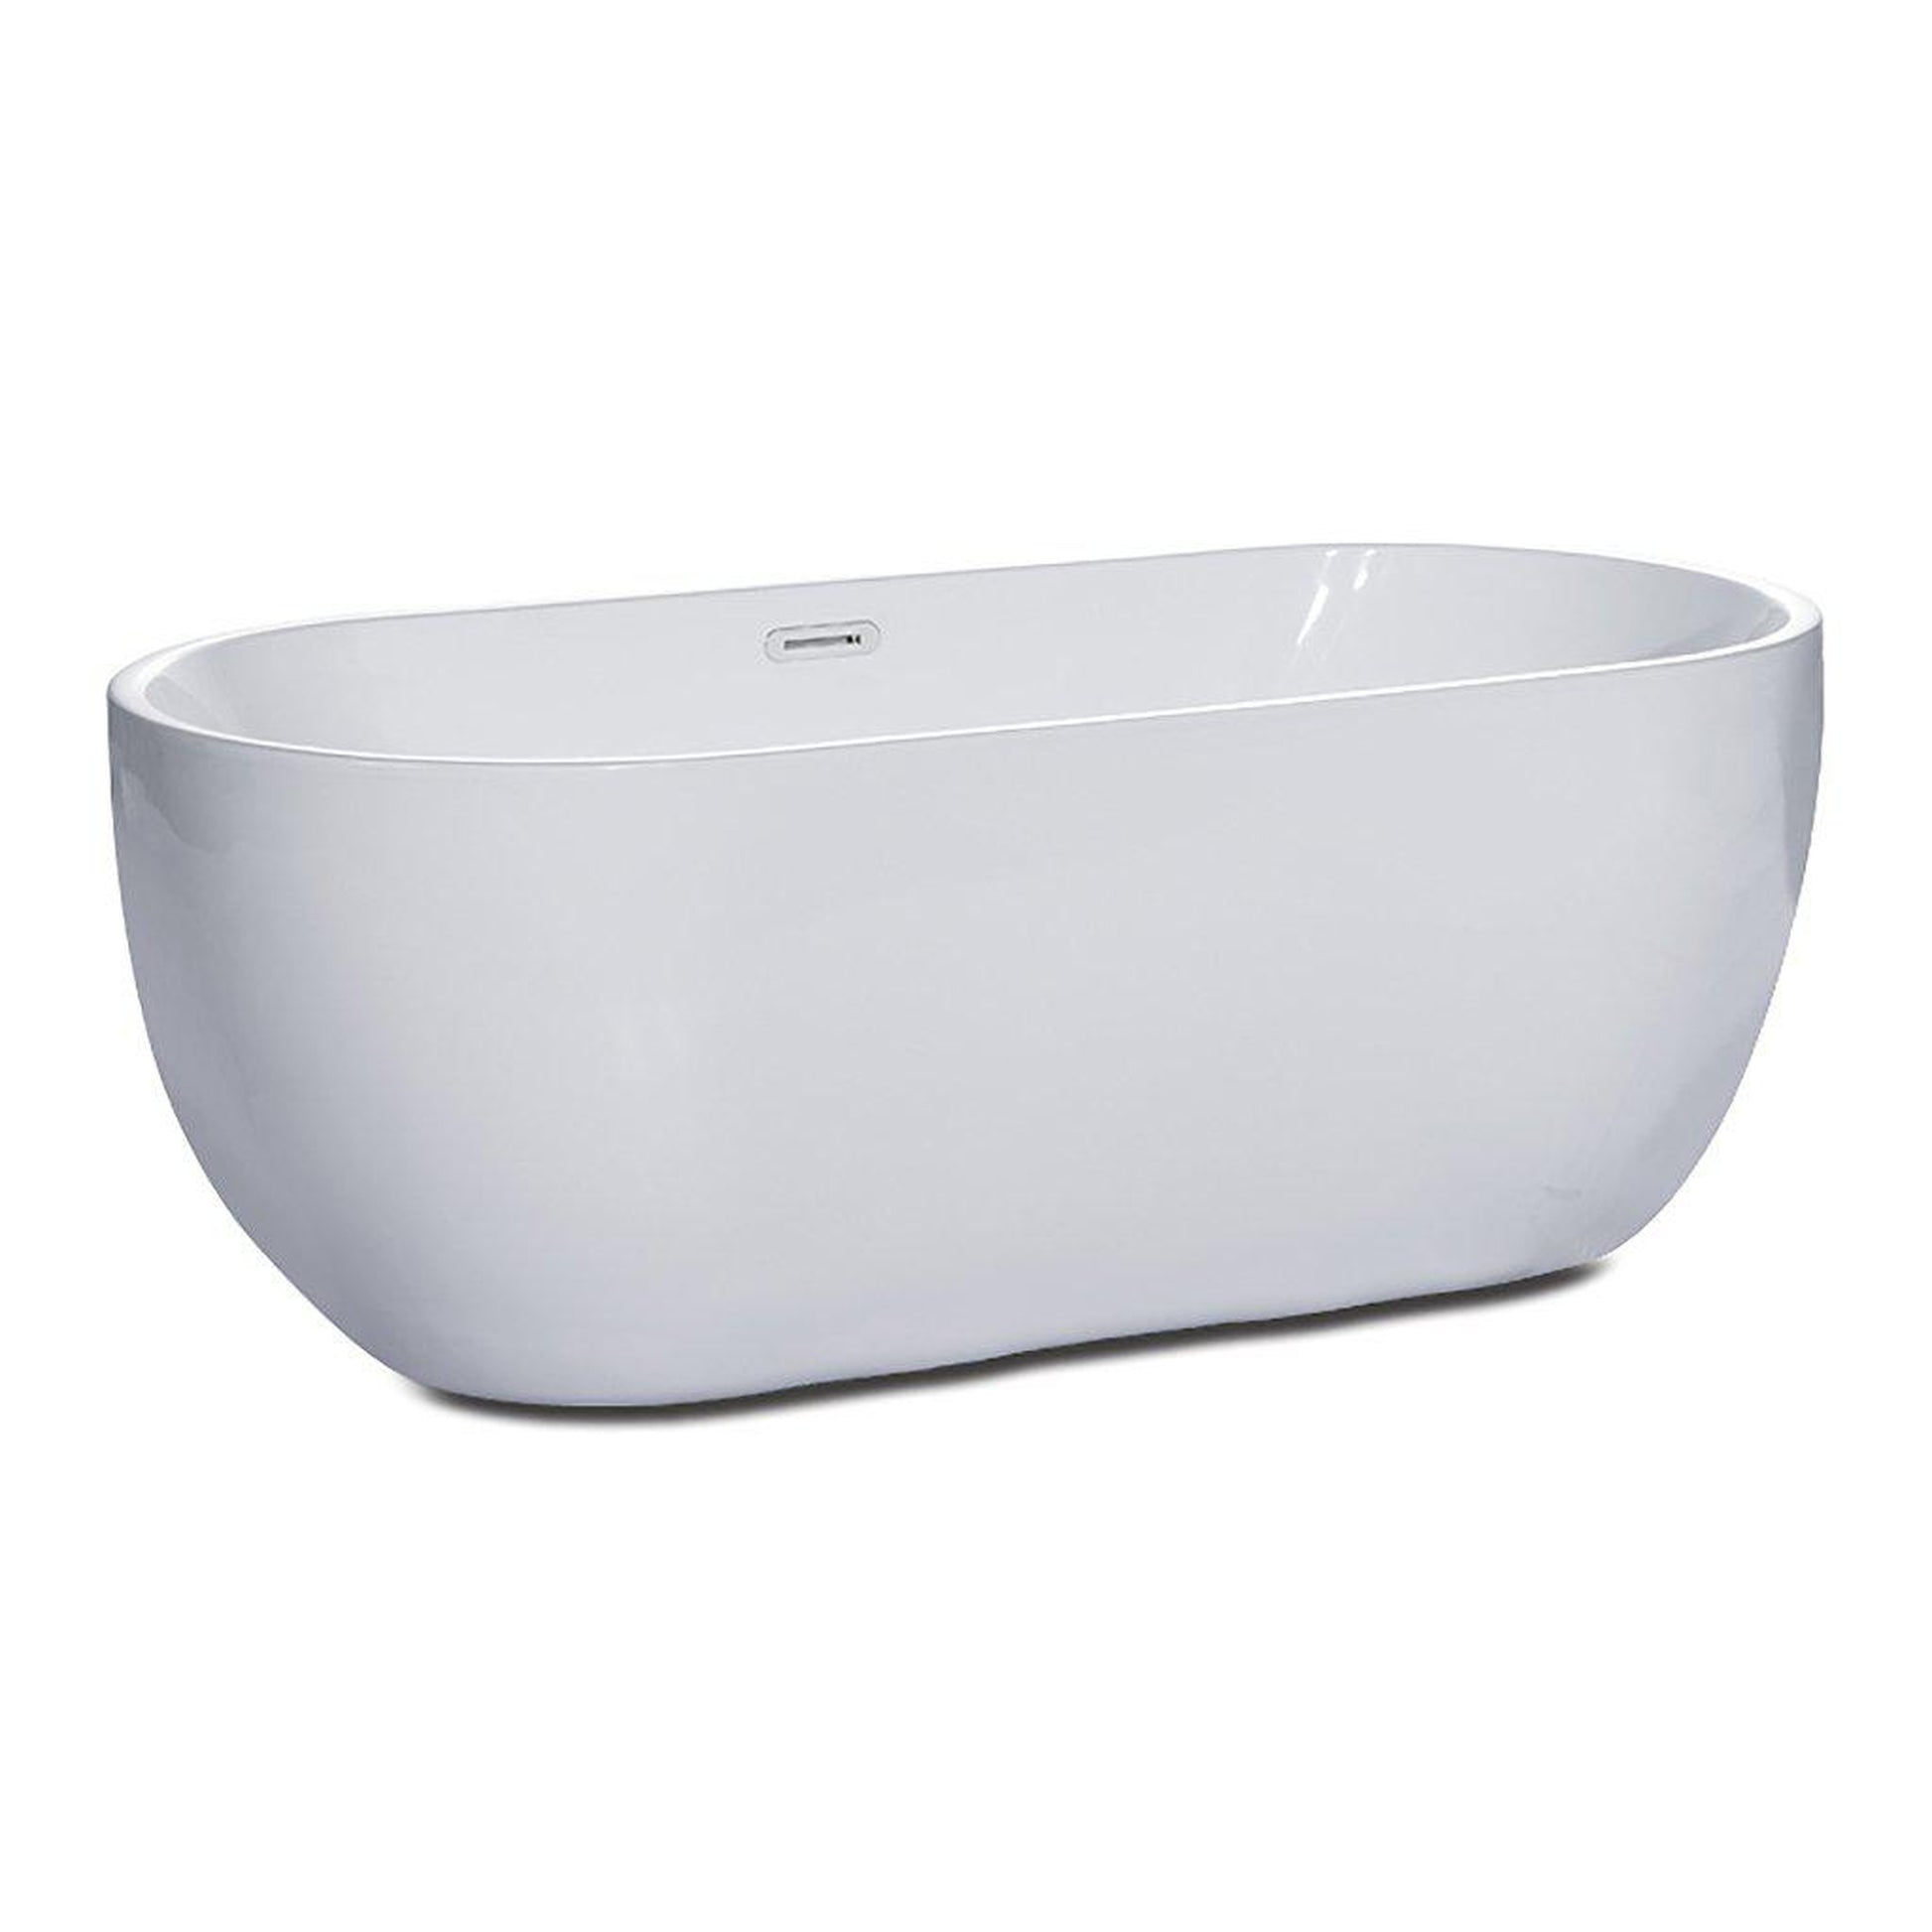 ALFI Brand AB8839 67" One Person Freestanding White Oval Acrylic Soaking Bathtub